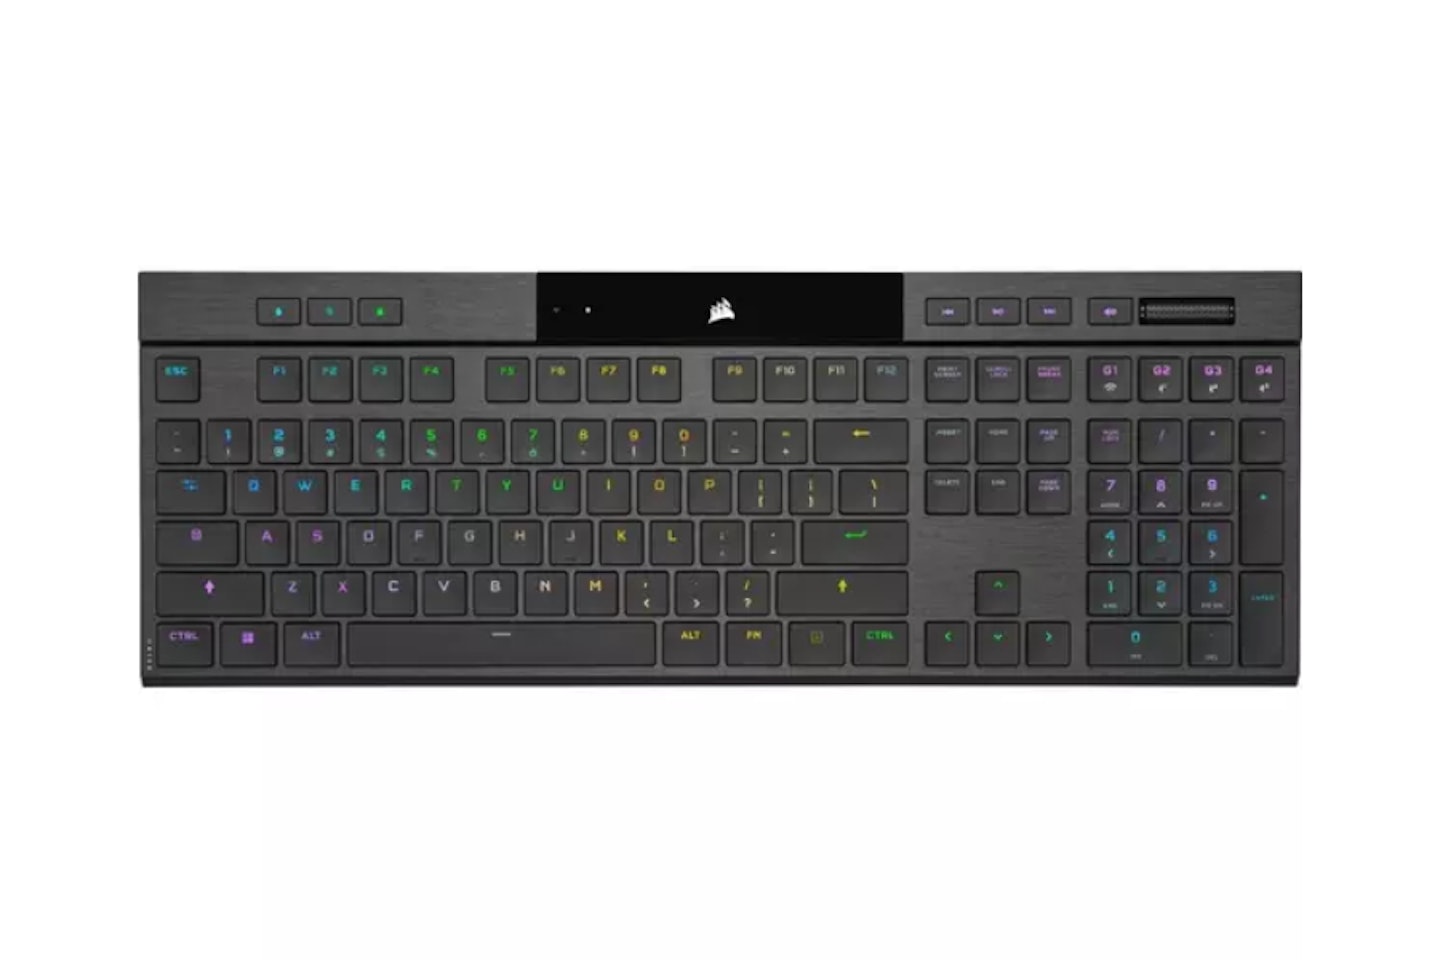 CORSAIR K100 AIR WIRELESS RGB Ultra-Thin Mechanical Gaming Keyboard